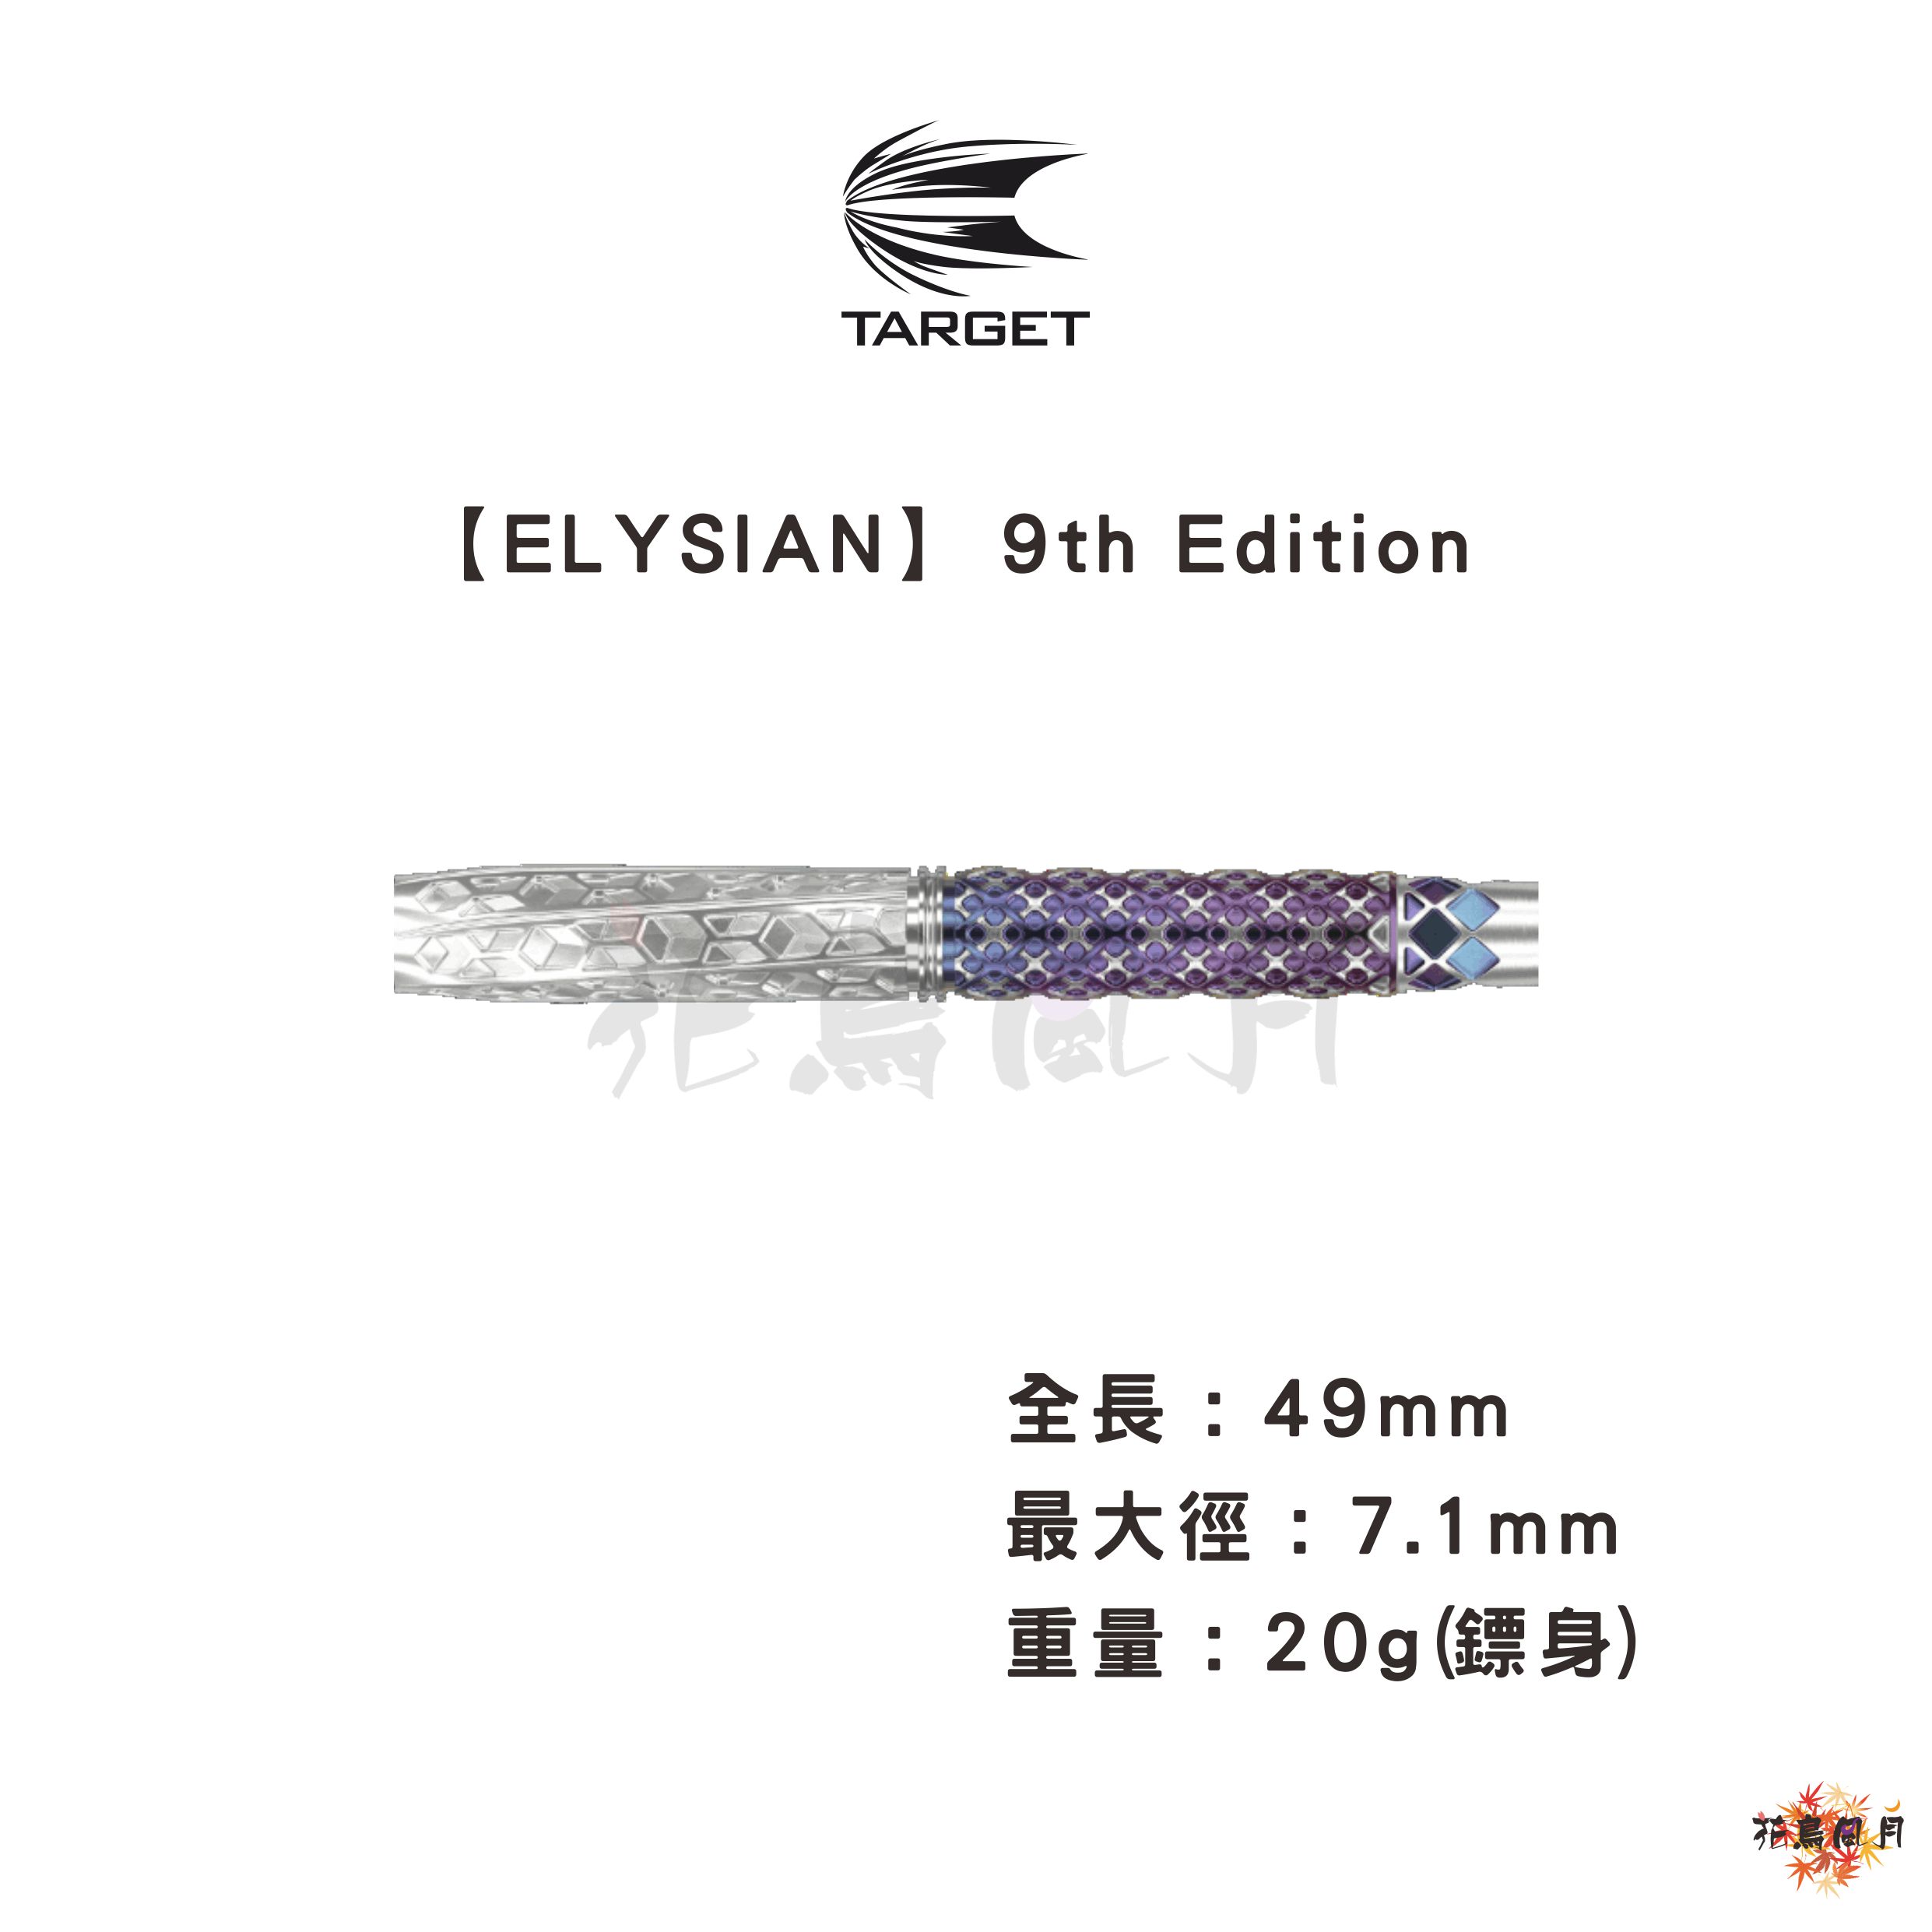 TARGET-ELYSIAN9-Edition